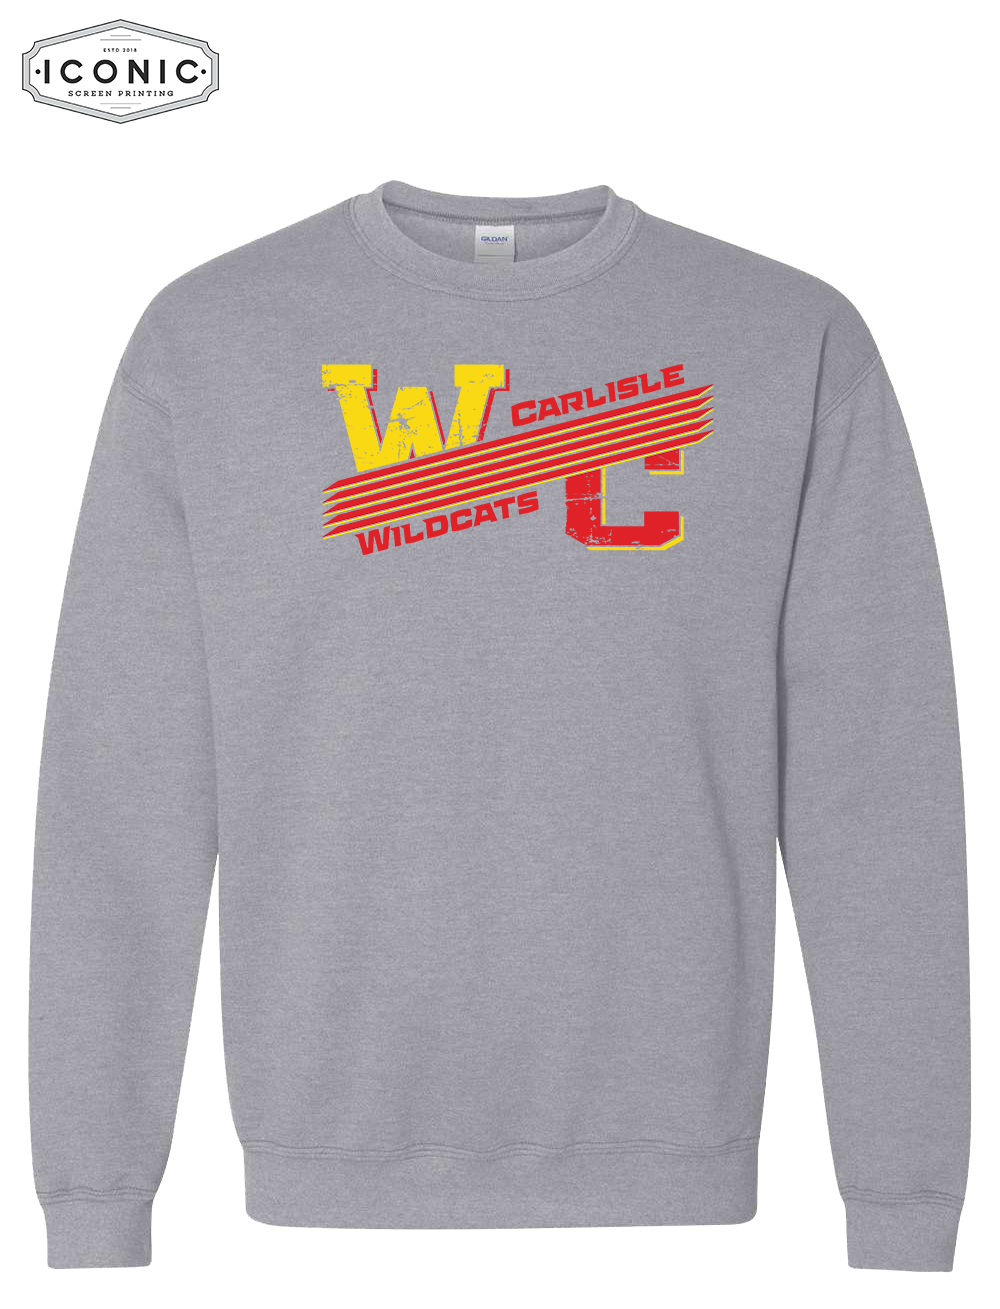 Carlisle Wildcats - Heavy Blend Sweatshirt